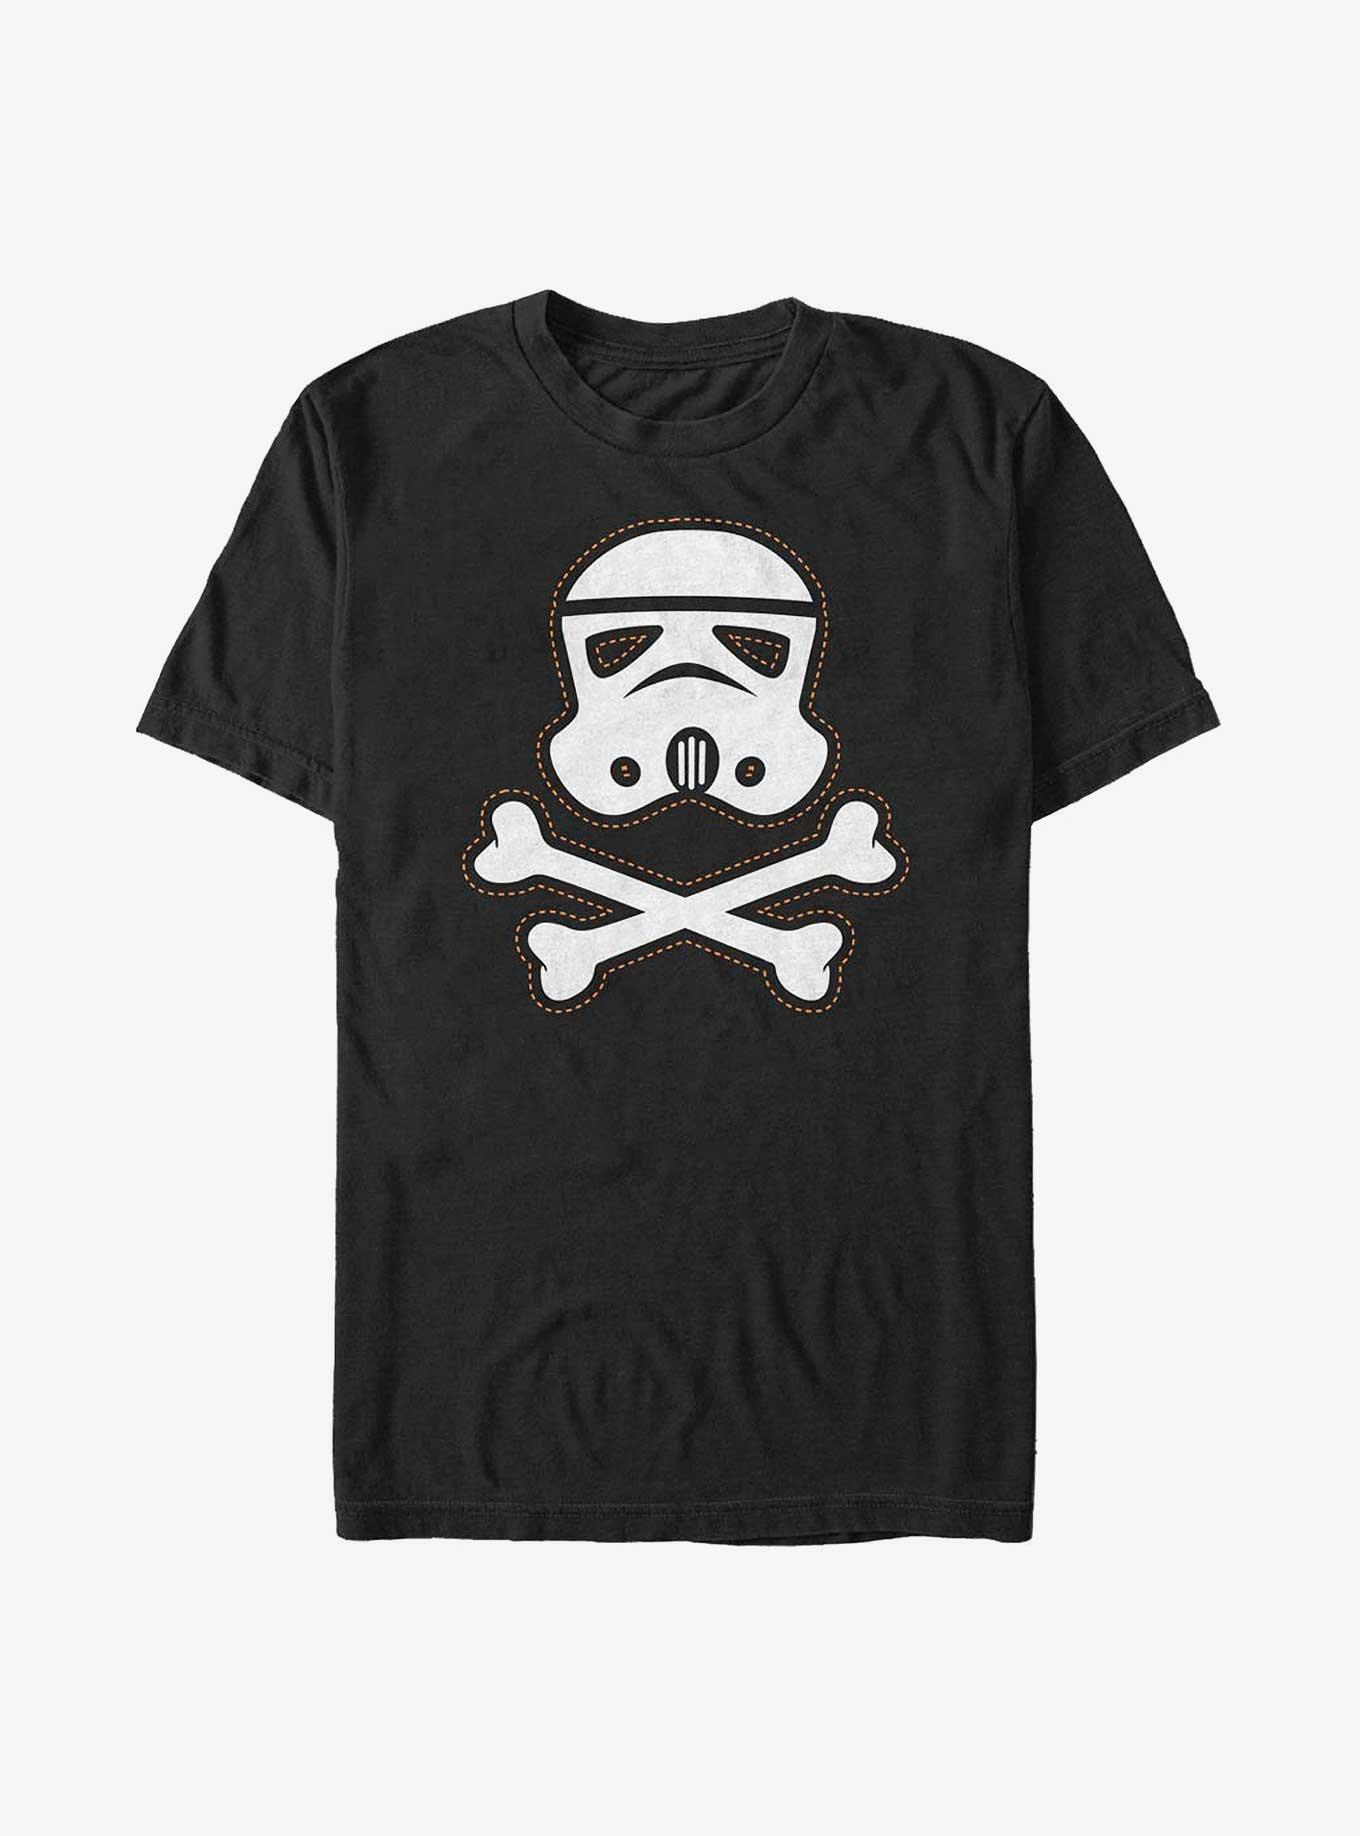 Star Wars Stormtrooper Skull Patch T-Shirt